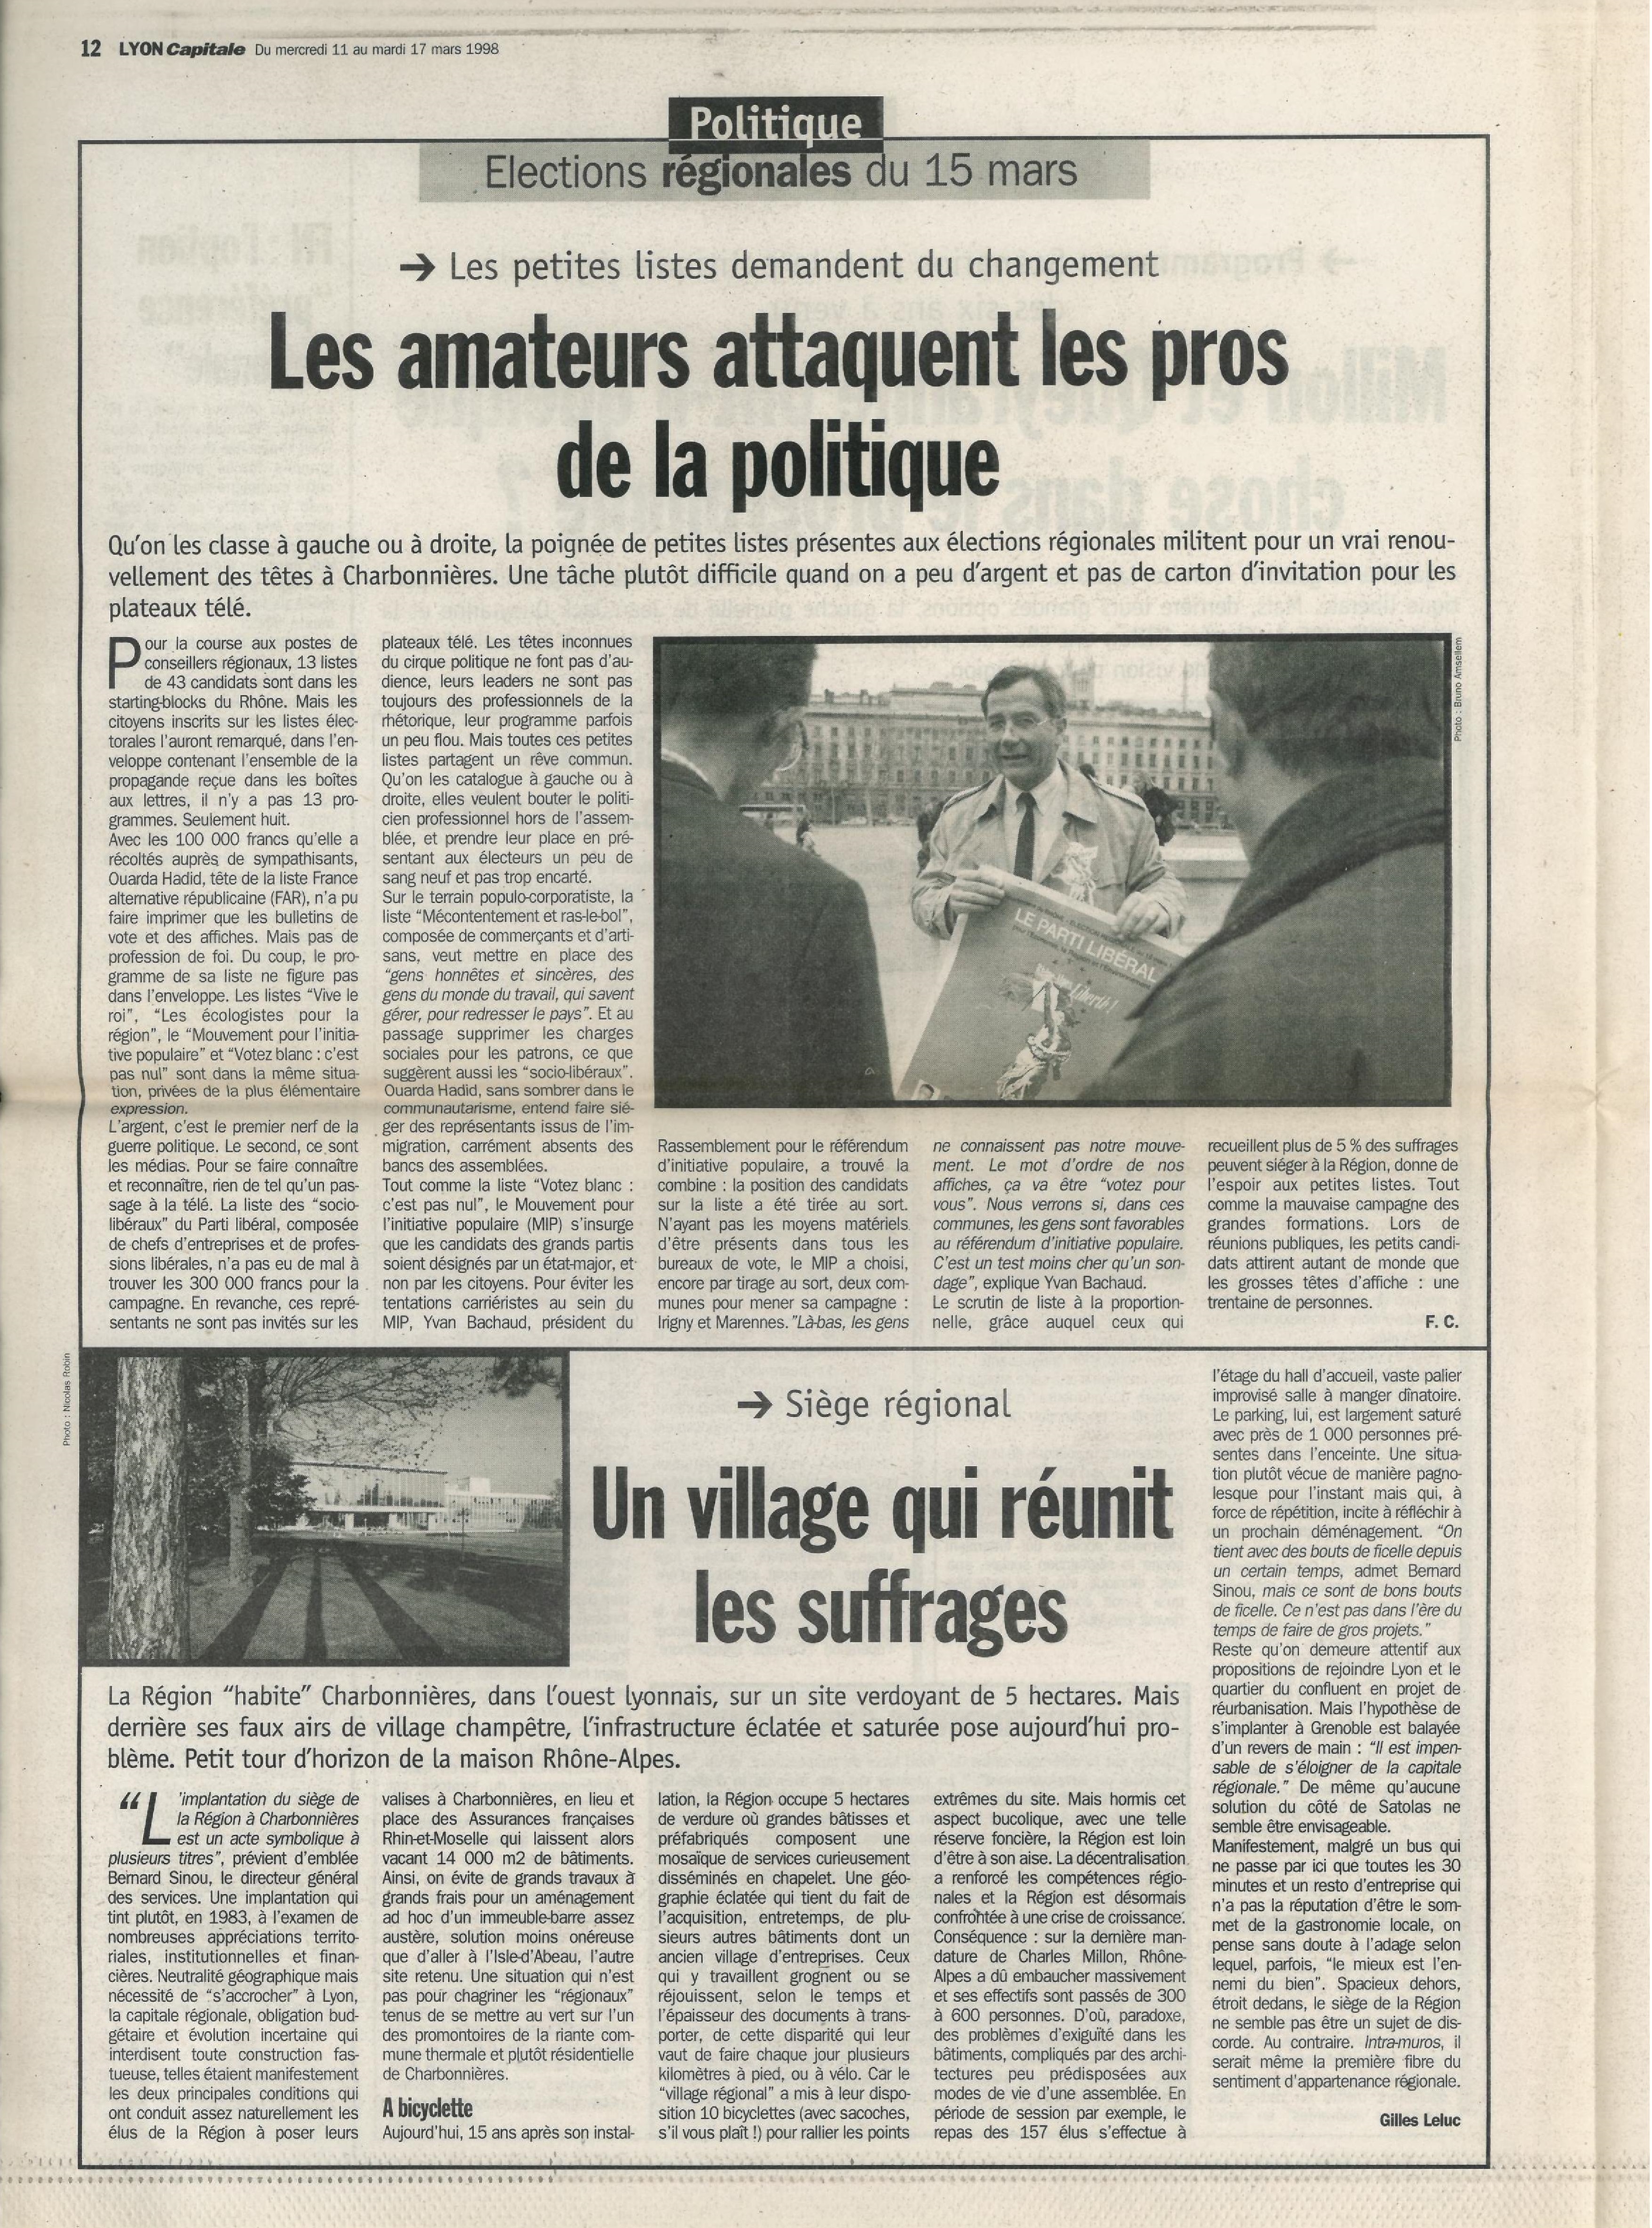 Lyon Capitale n°162, 11 mars 1998, p. 12 © Lyon Capitale